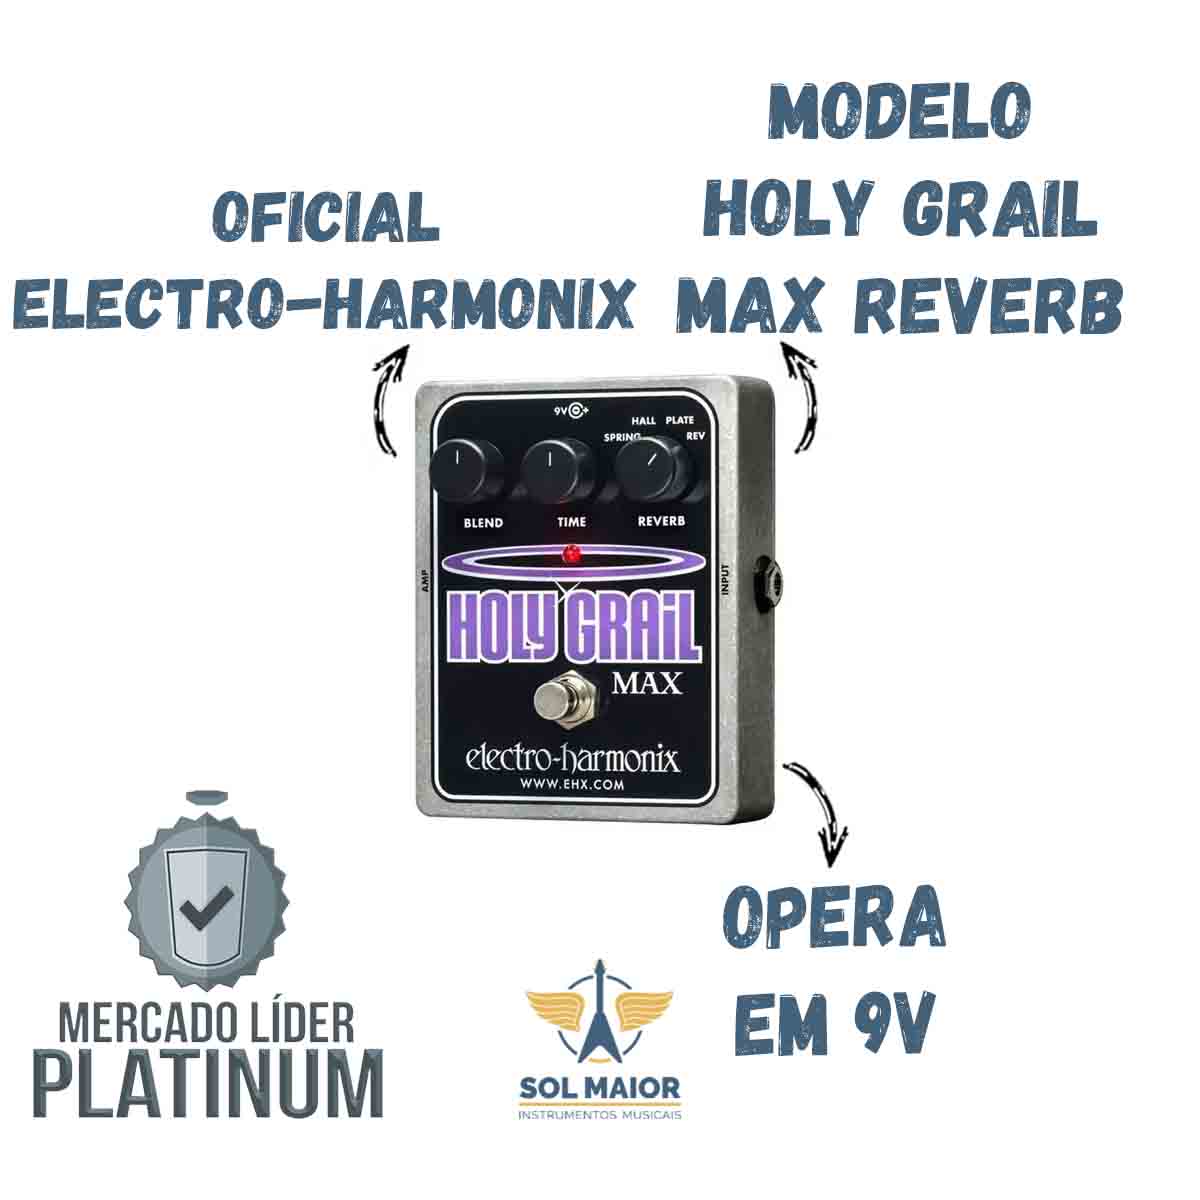 Pedal Electro-harmonix Holy Grail Max Reverb - Holygrailmax - Grupo Solmaior